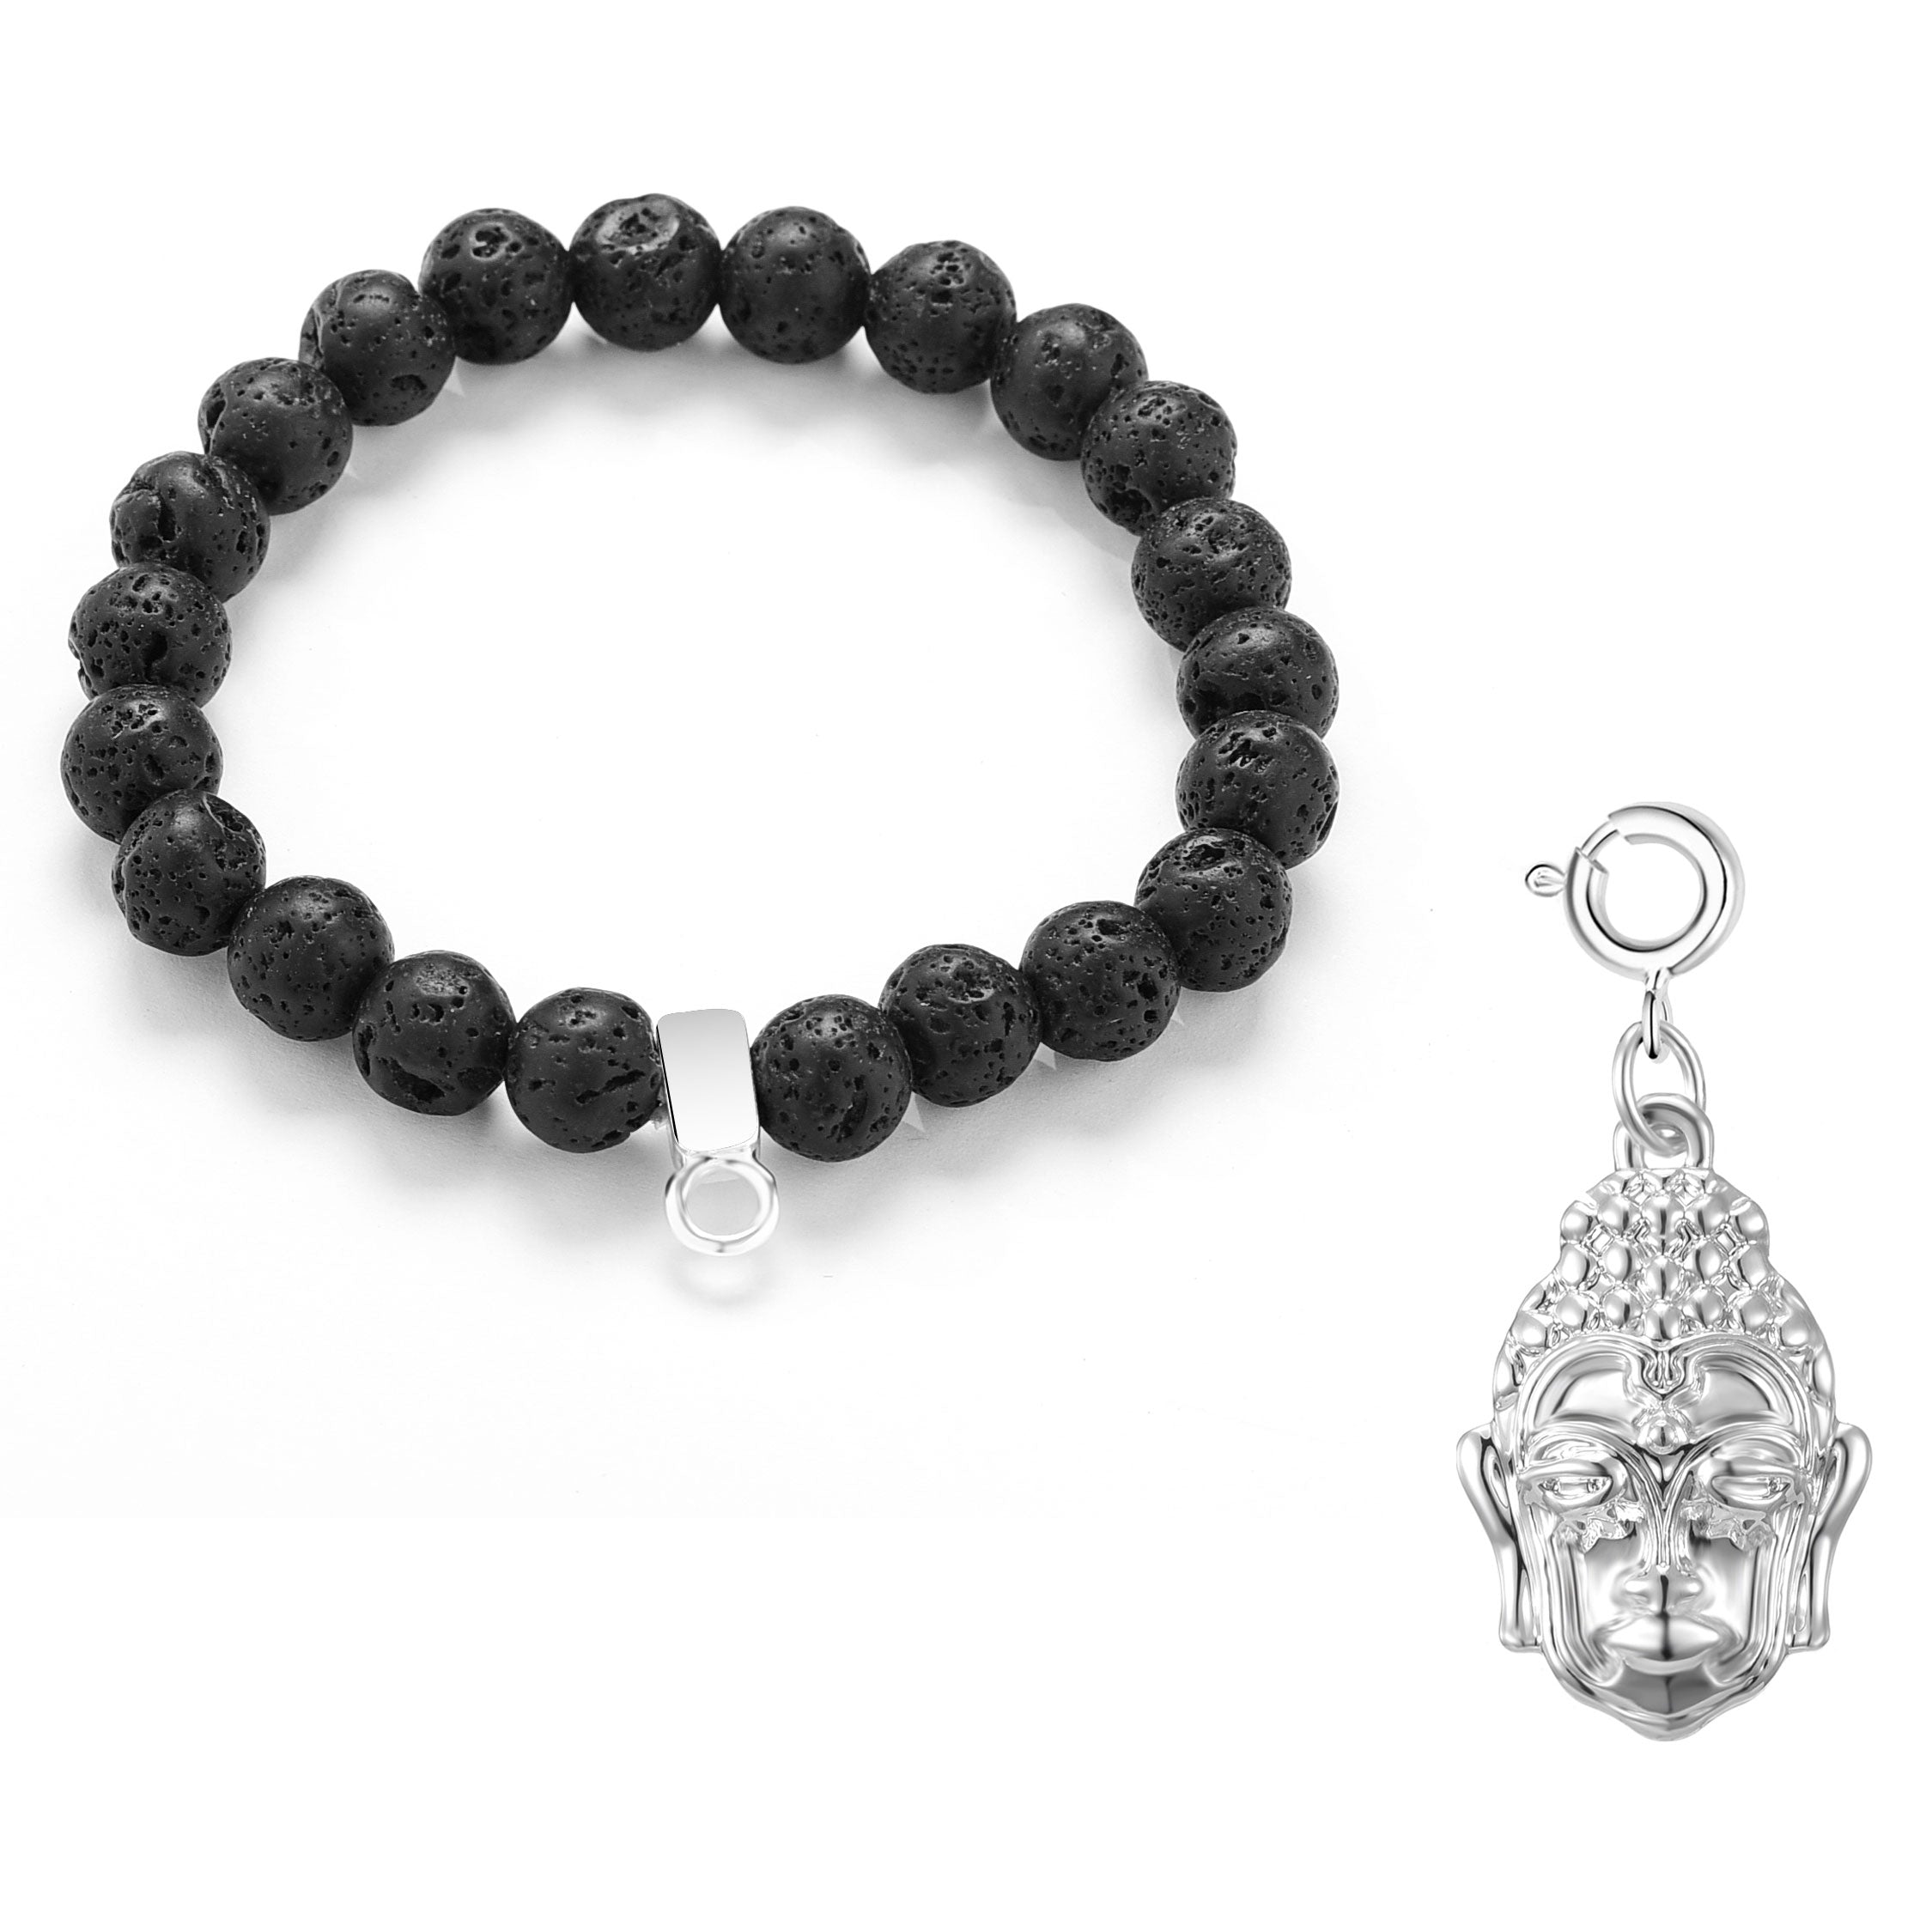 Lava Rock Gemstone Bracelet with Charm Created with Zircondia® Crystals